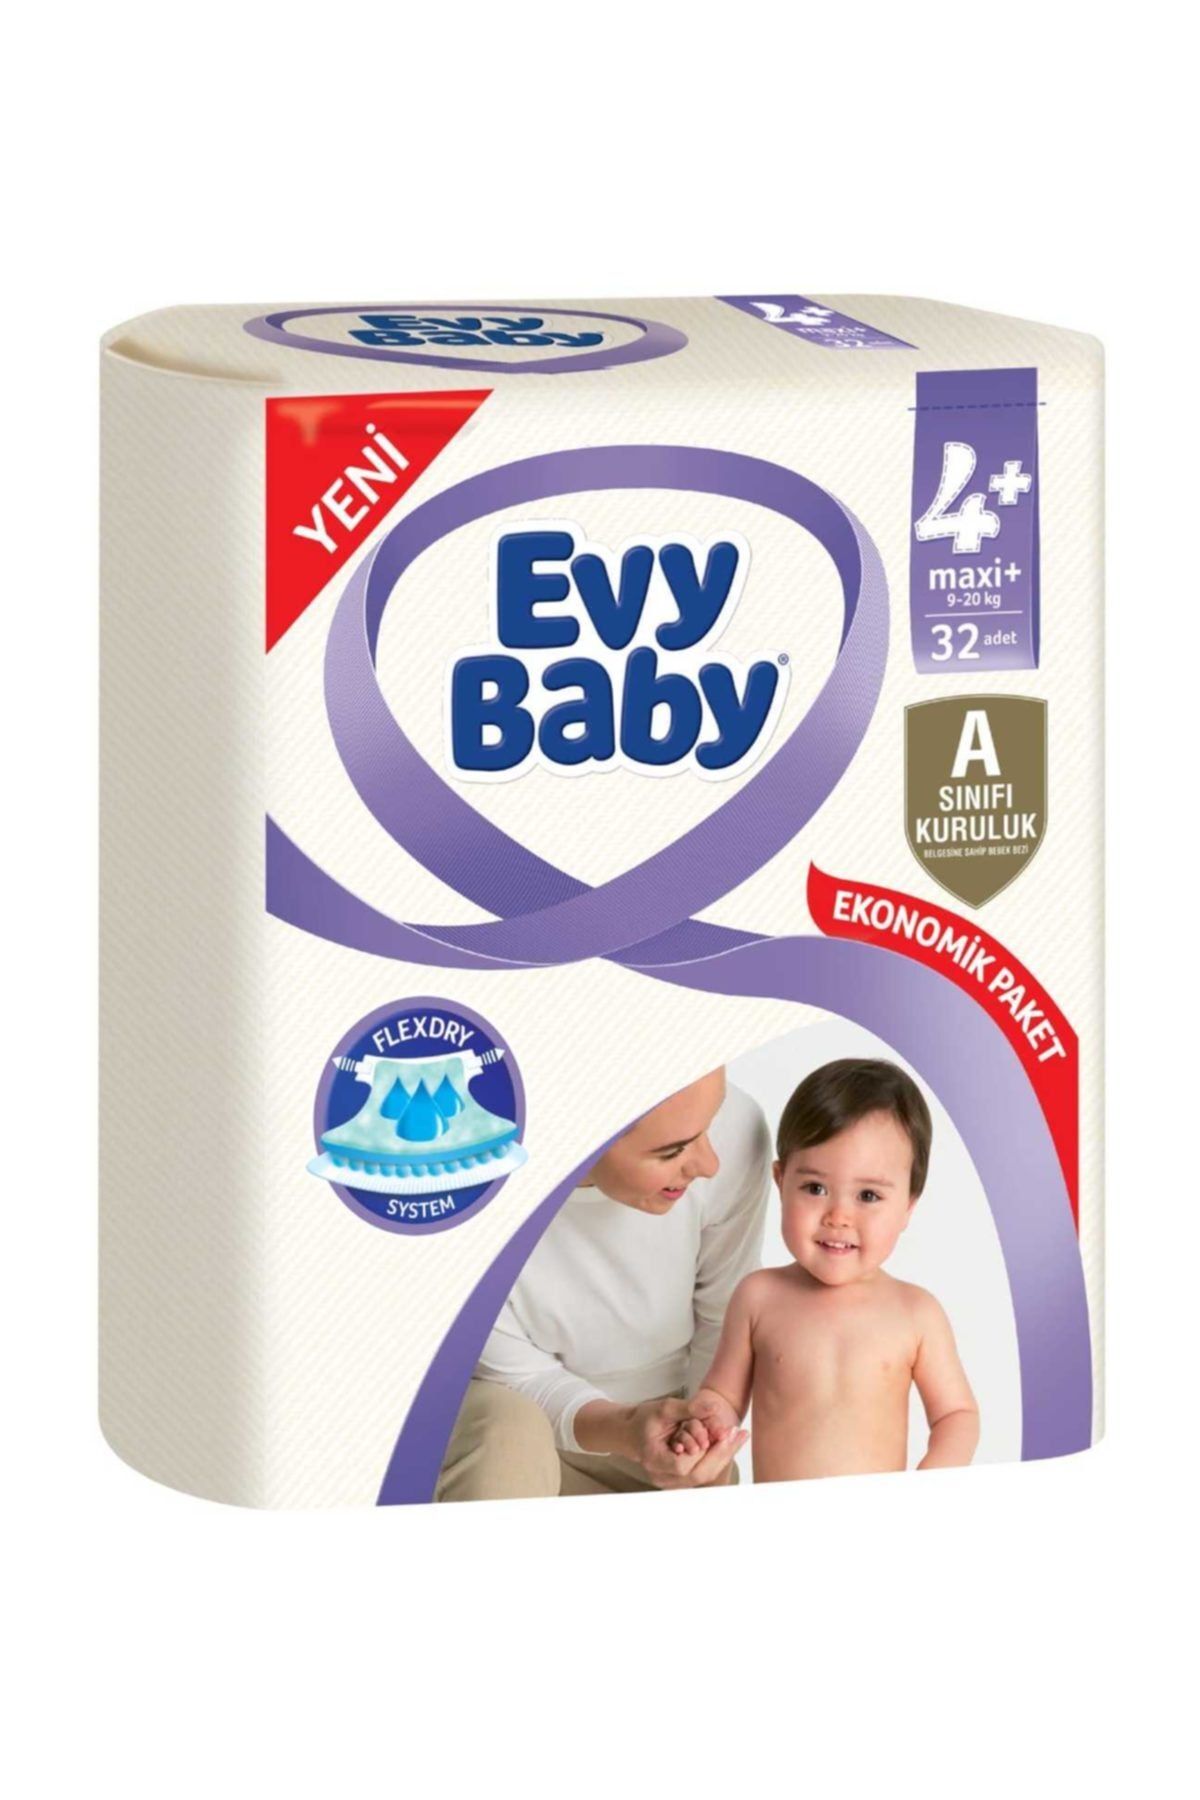 Evy Baby Bebek Bezi 4+ Beden Maxi Plus Jumbo Ekonomik Paket 32 Adet